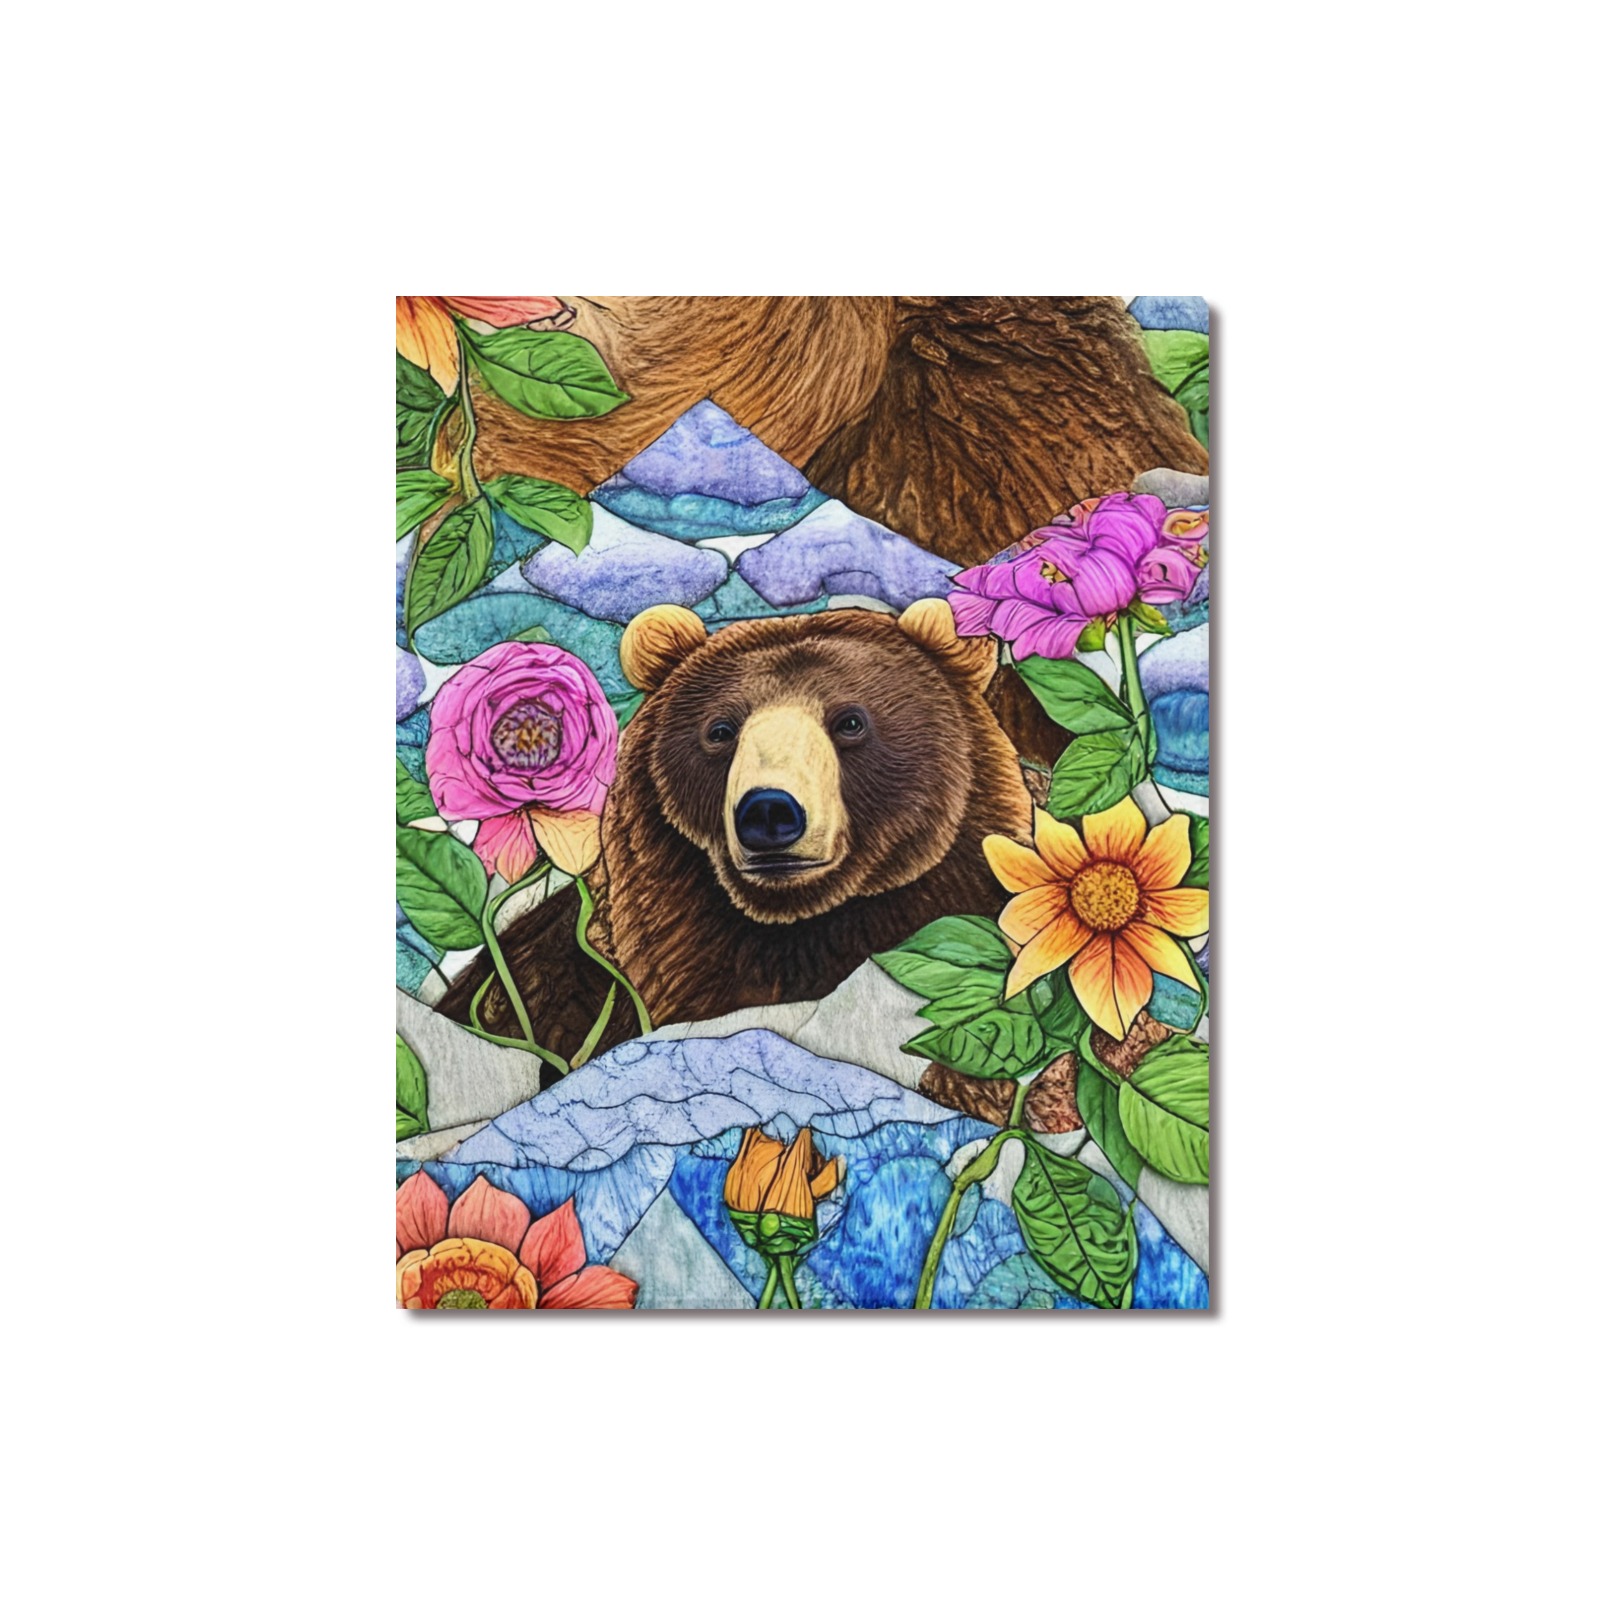 Boho Bear Simulated Quilt Artwork Frame Canvas Print 16"x20"